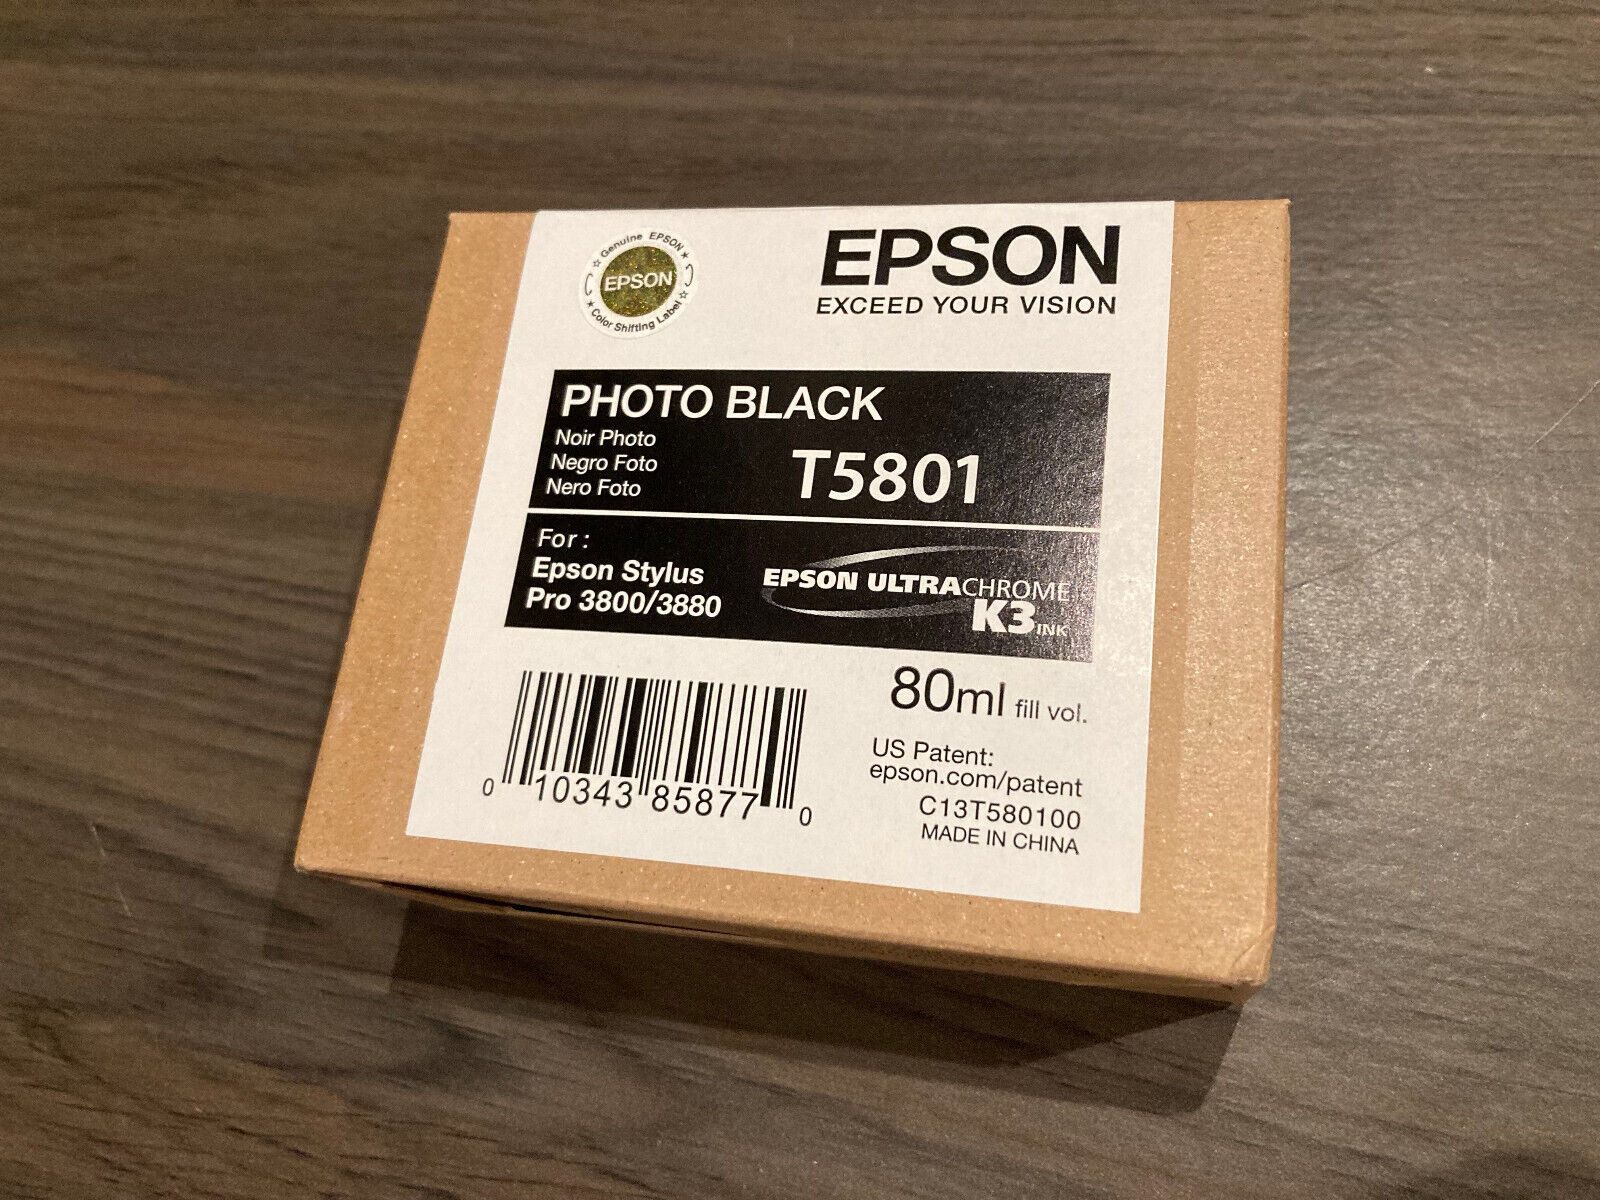 Genuine Epson T5801 Photo Black Ink - EXPIRED 02-2017